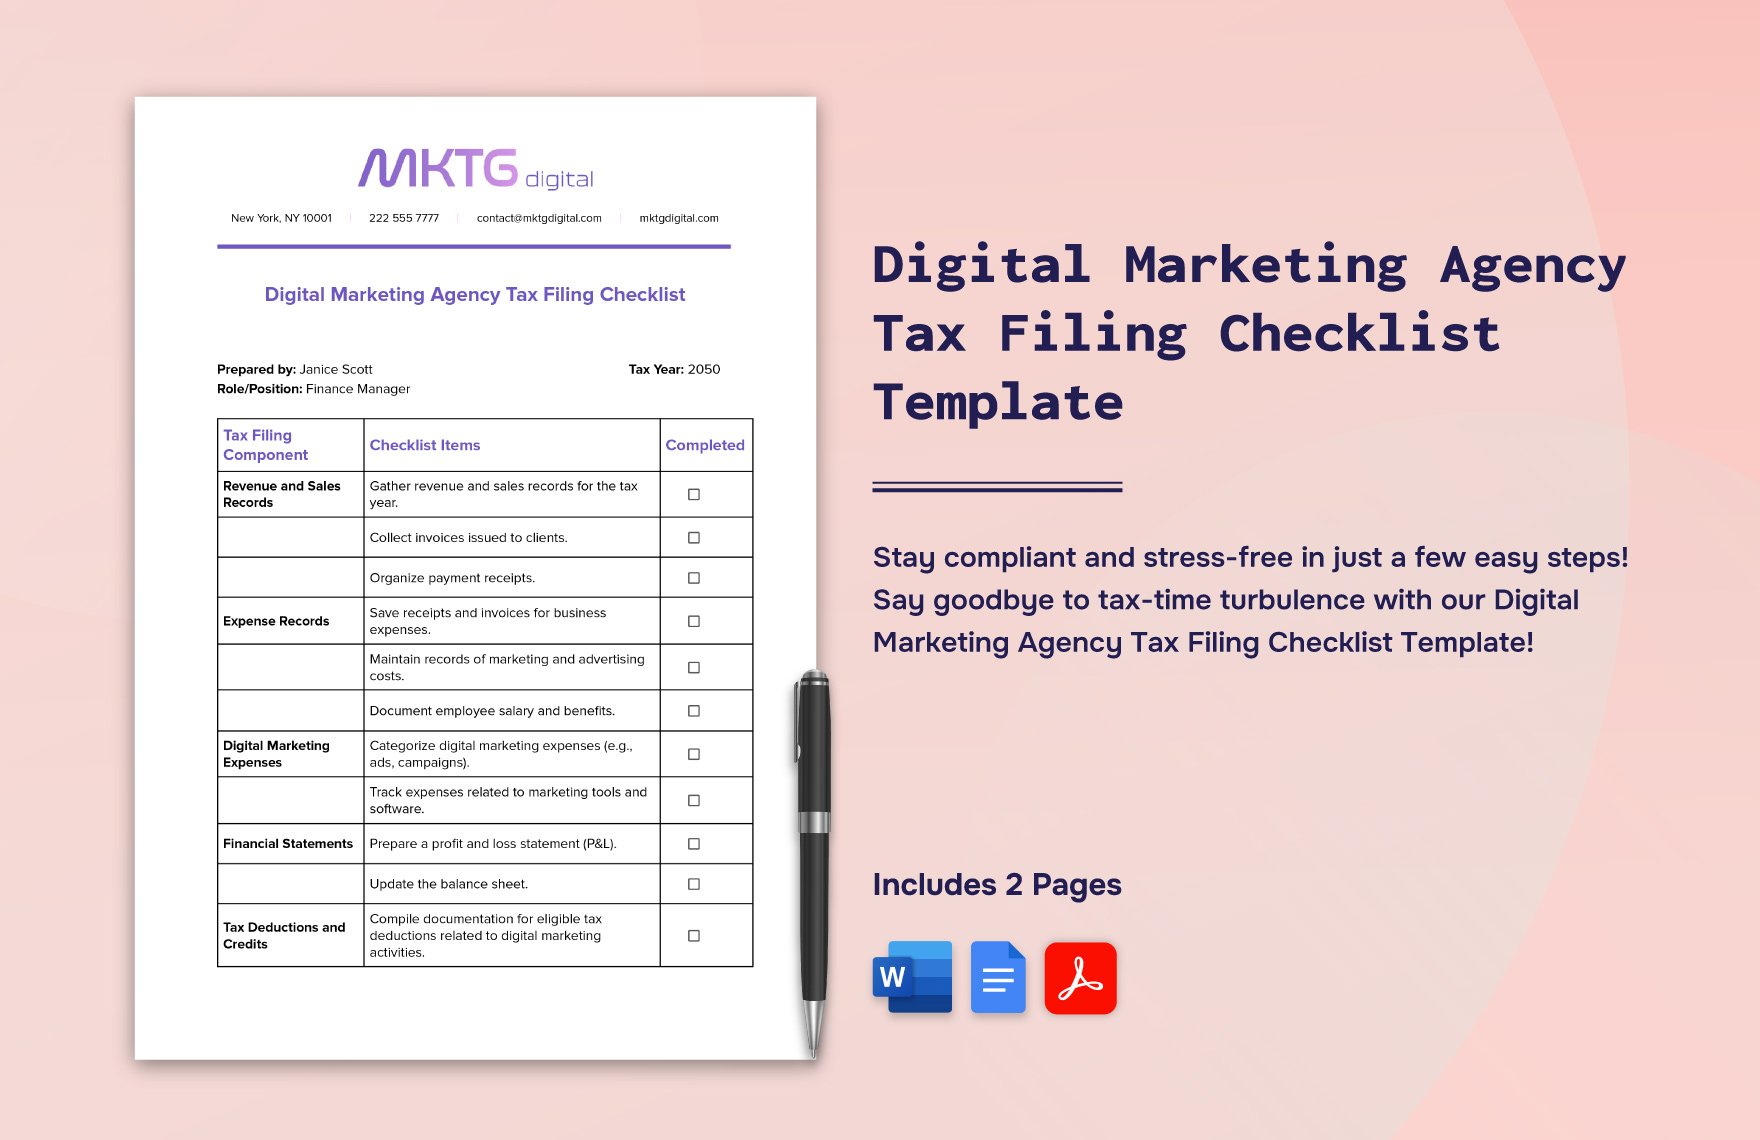 Digital Marketing Agency Tax Filing Checklist Template